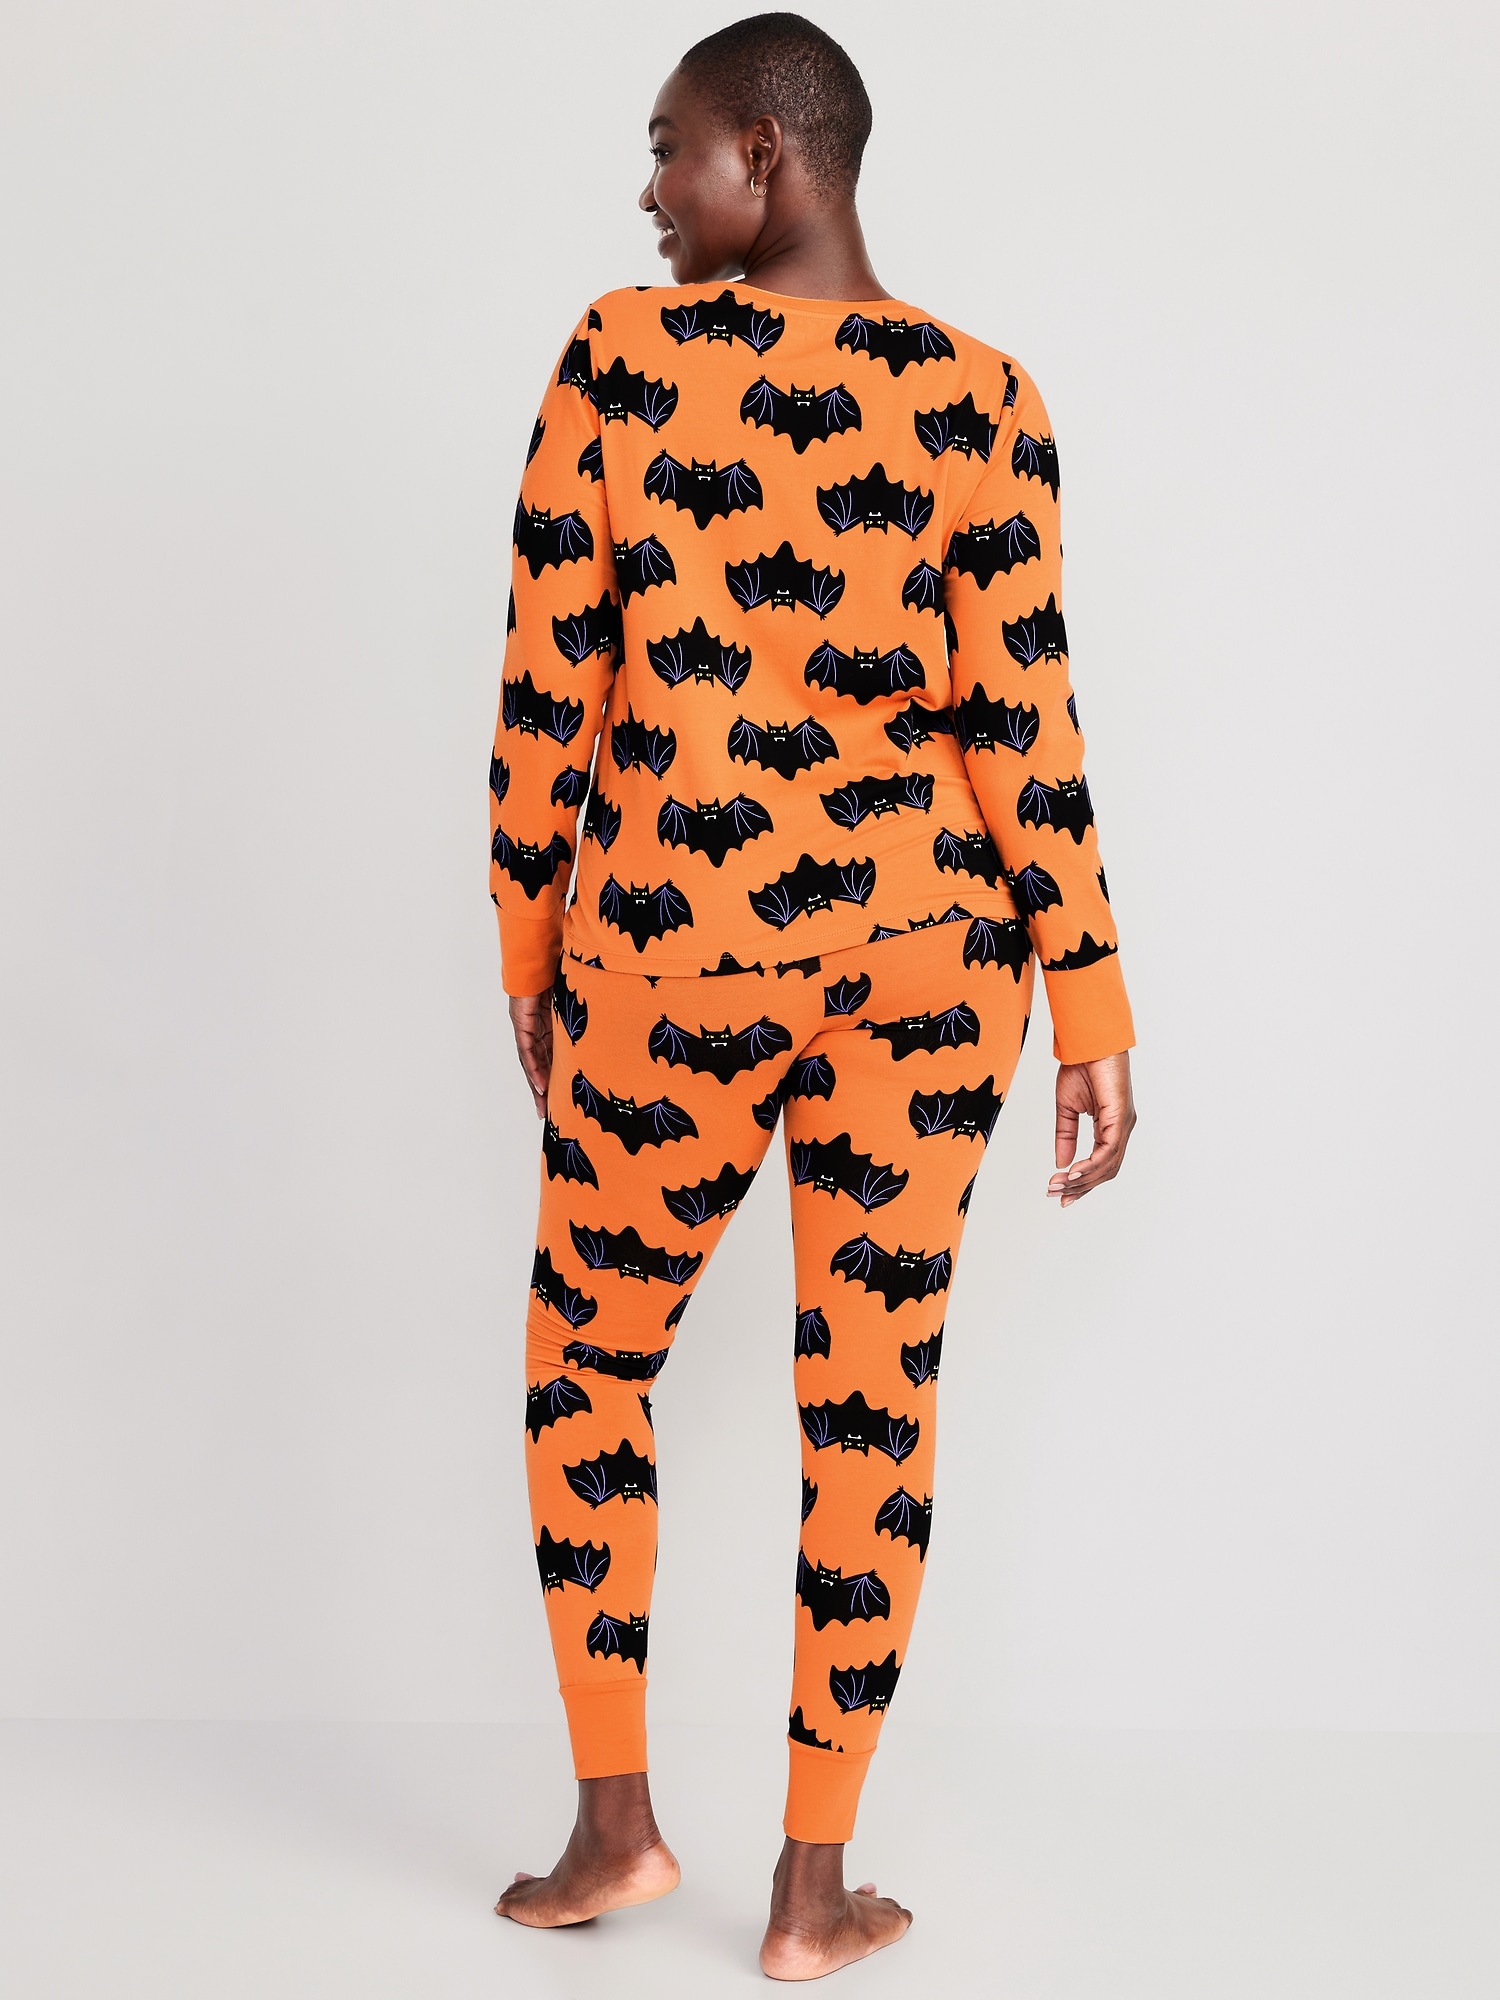 Matching Halloween Print Pajama Set | Old Navy